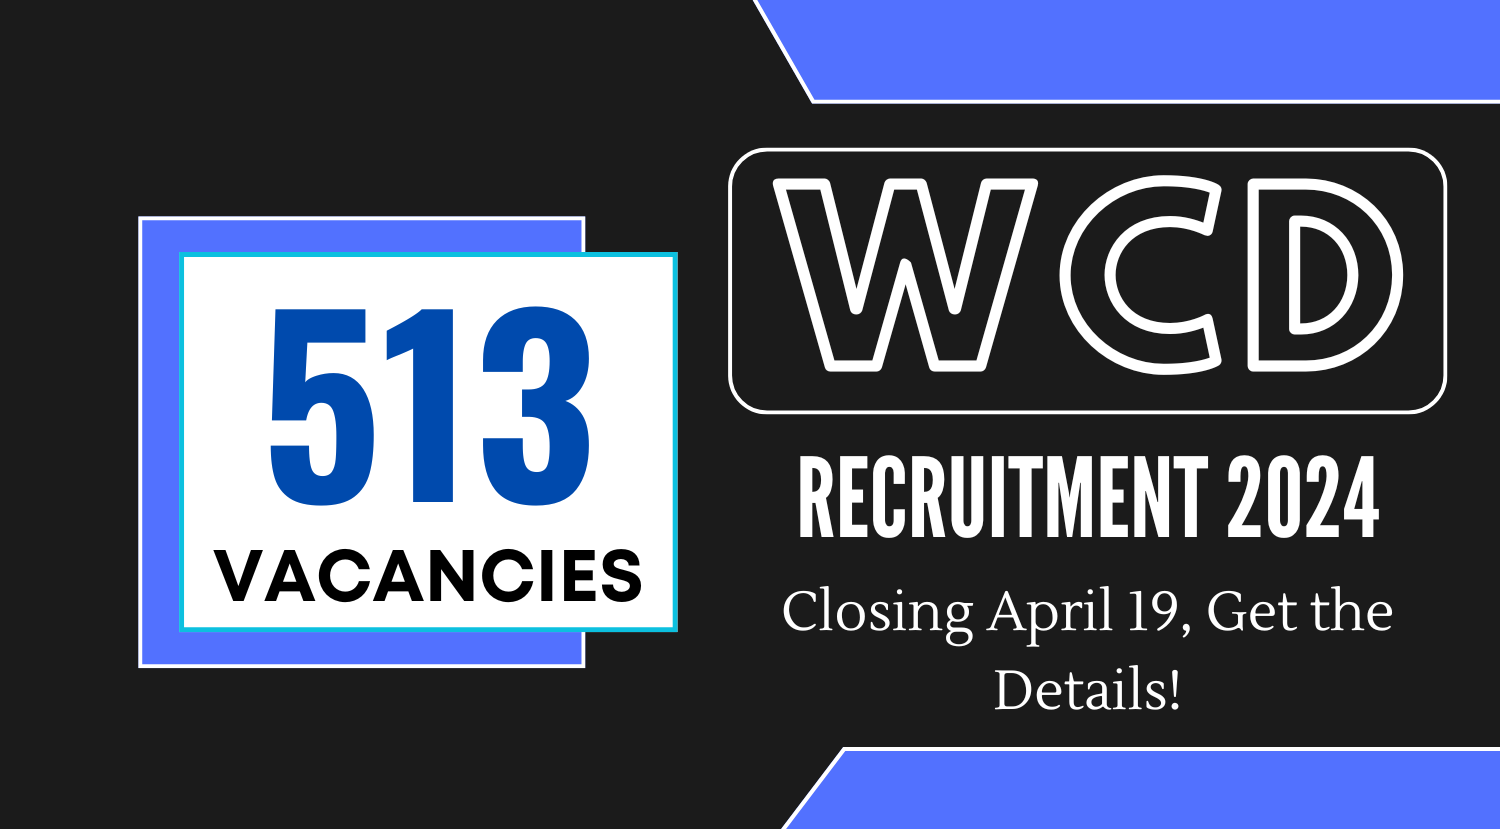 WCD Recruitment Closing April 19 for 513 Vacancies - Get the Details